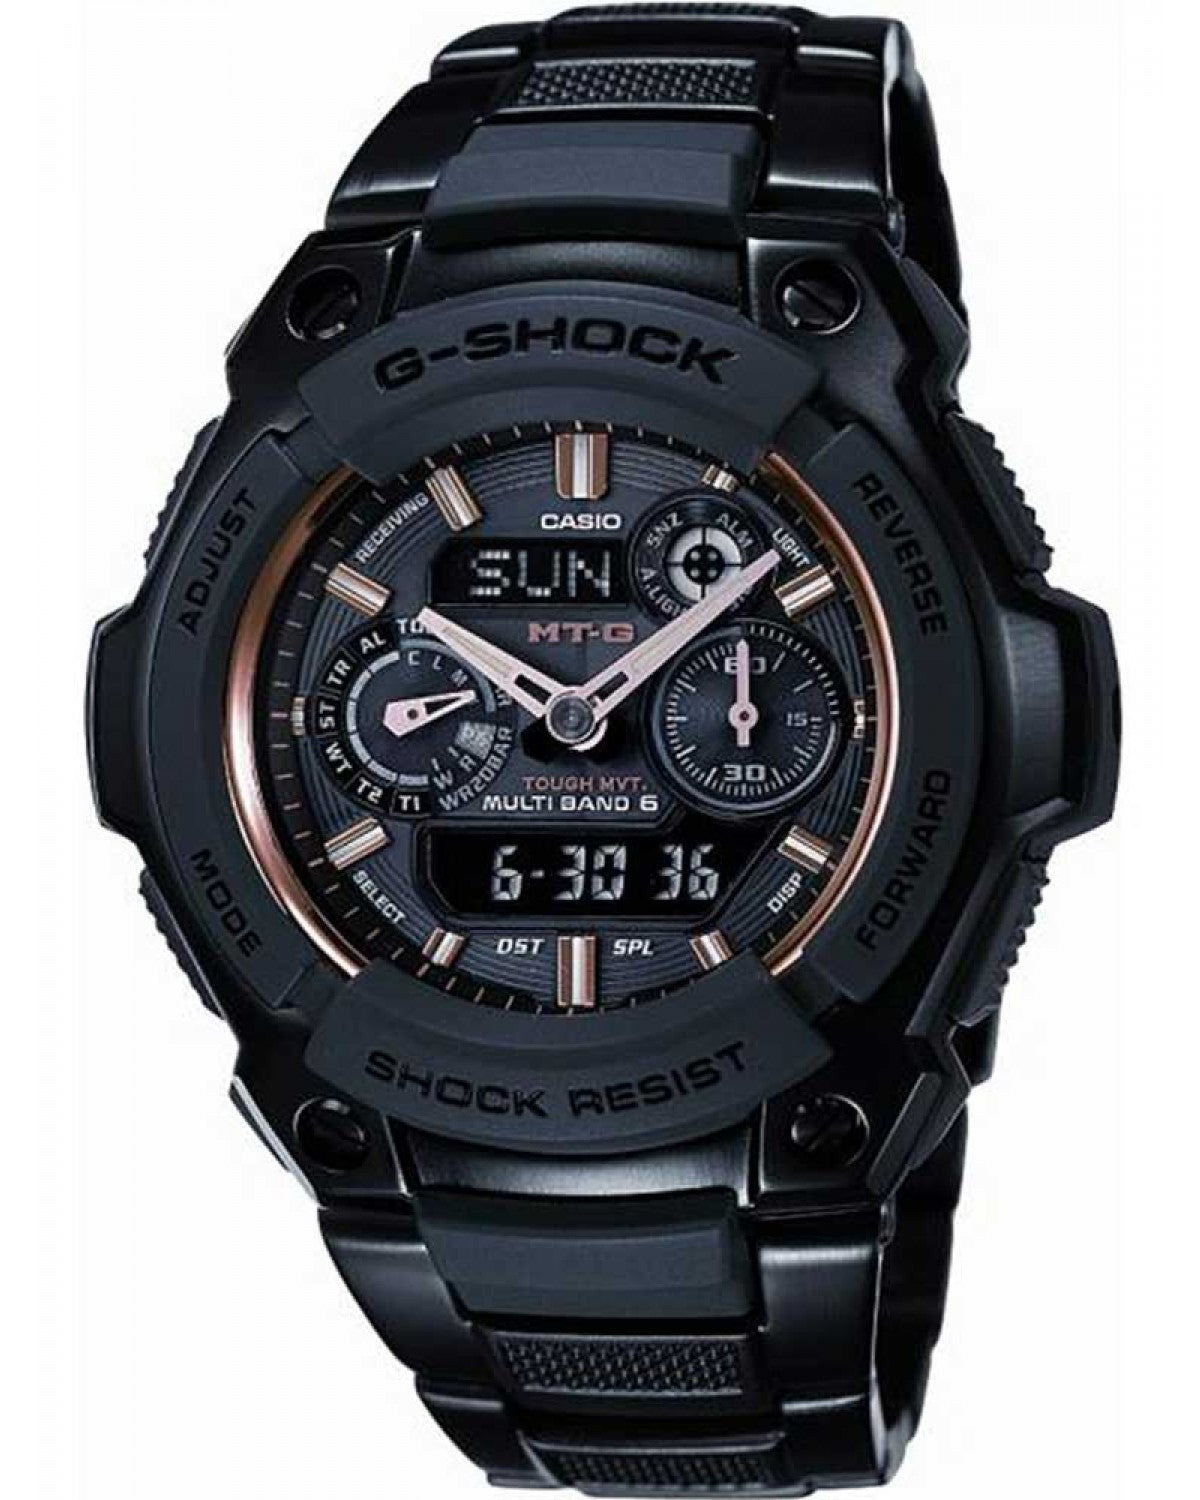 G-Shock Watch Premium M-TG D